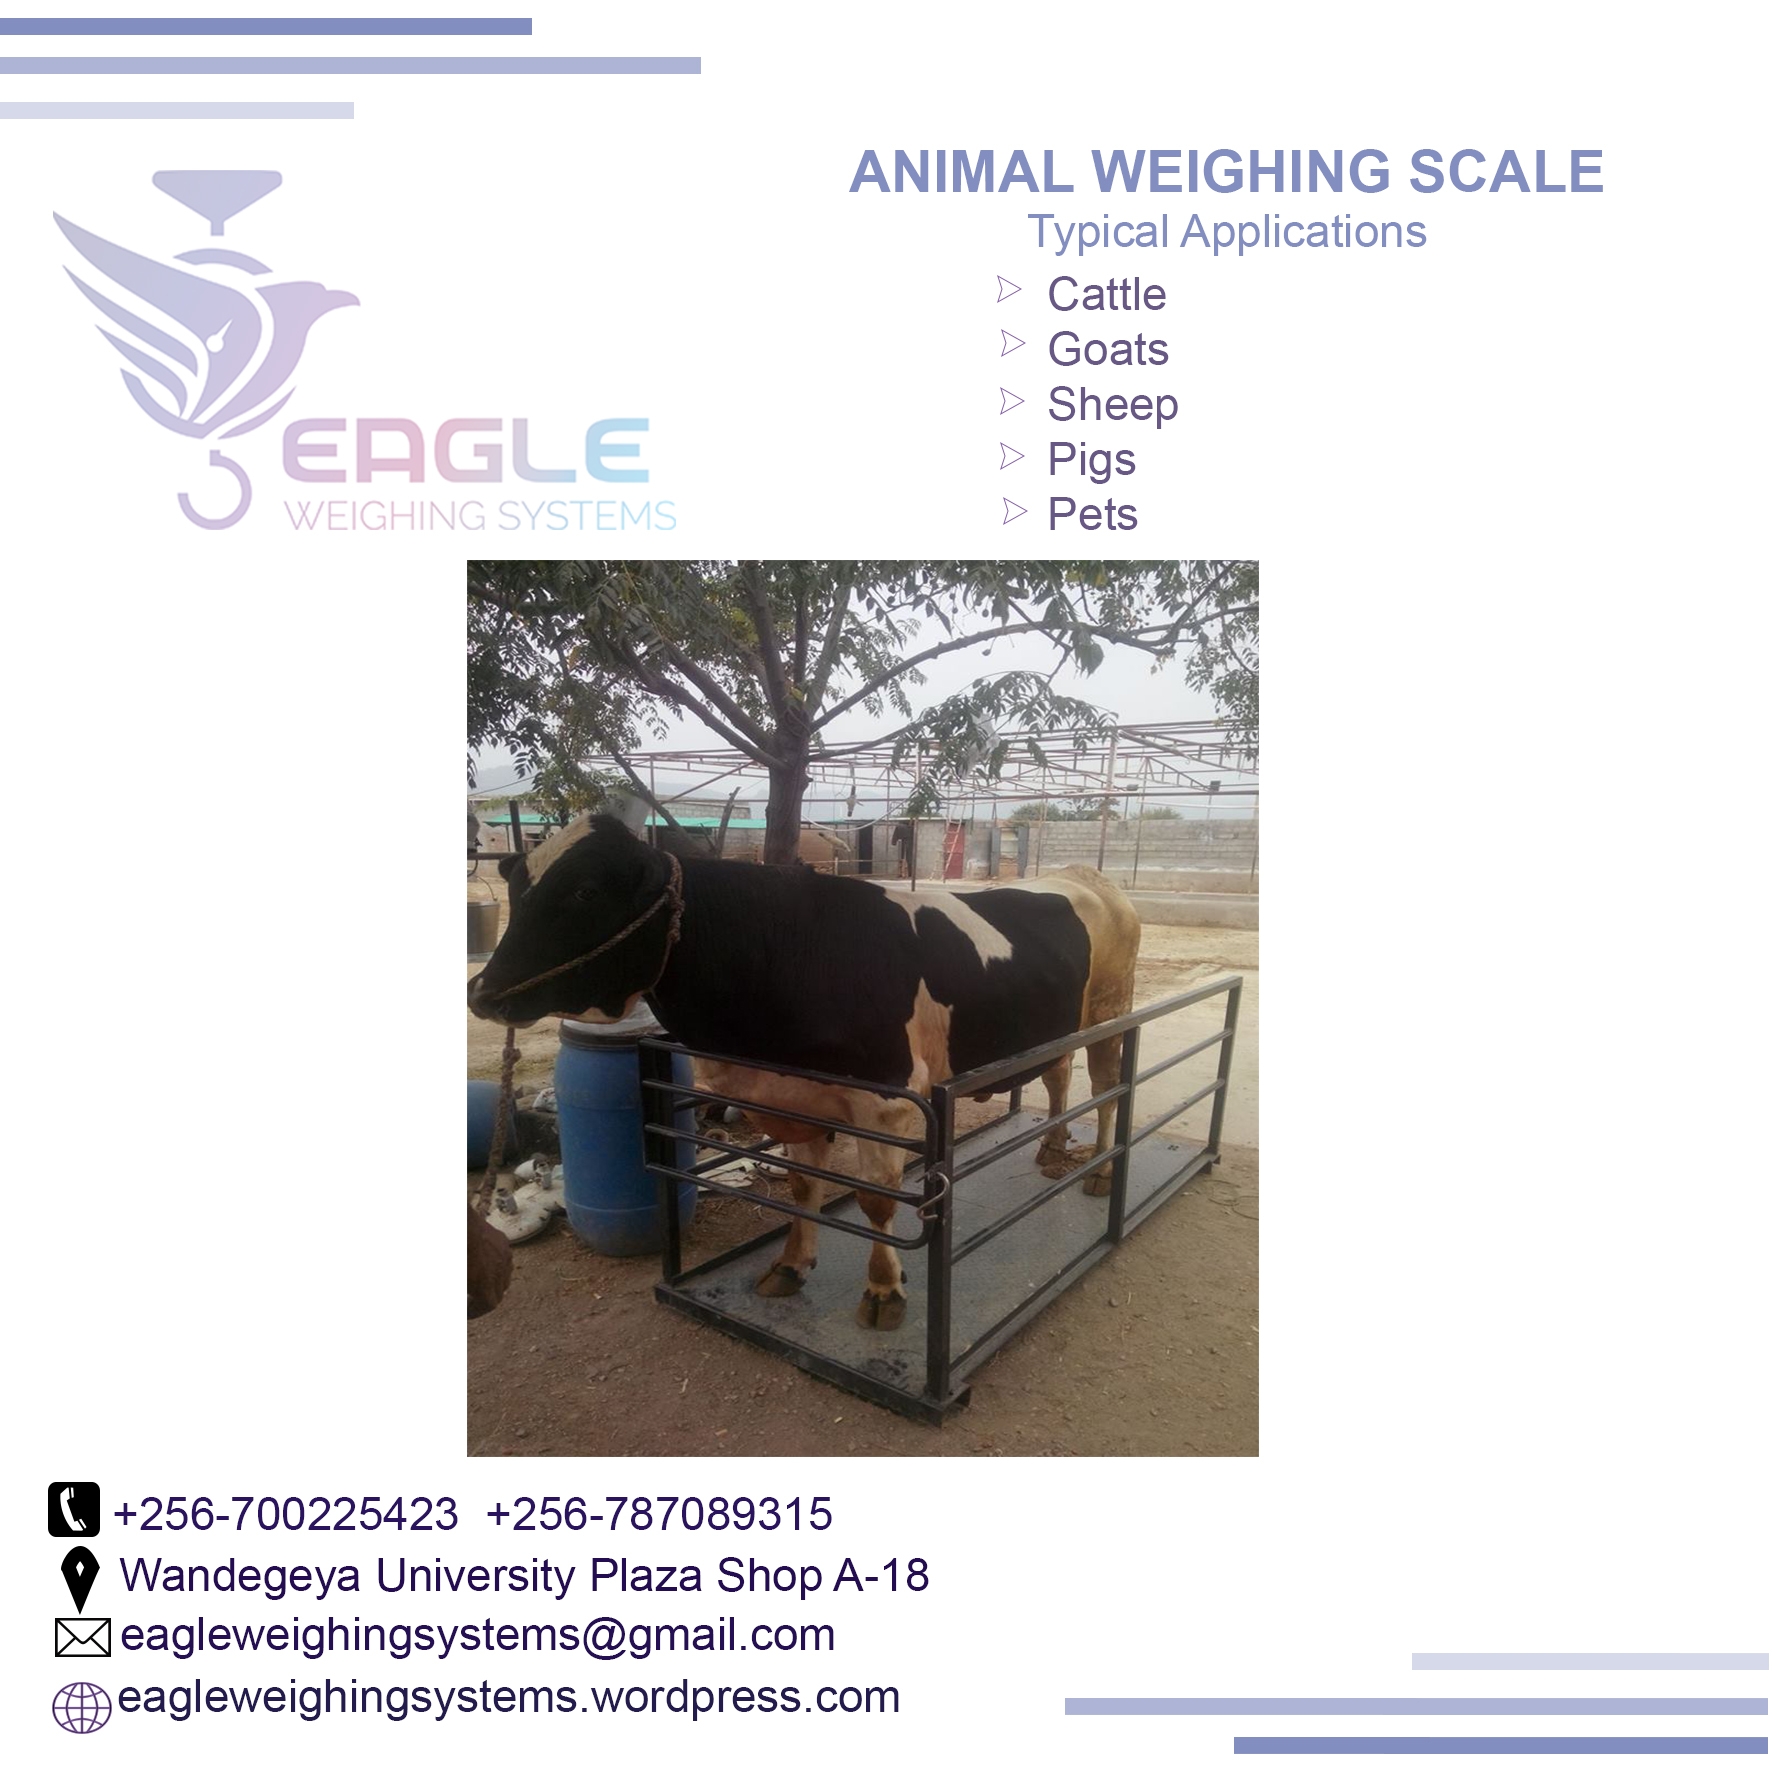 Eagle animal weighing scales 3000 Kg platforms cattle scales - Pundas ...